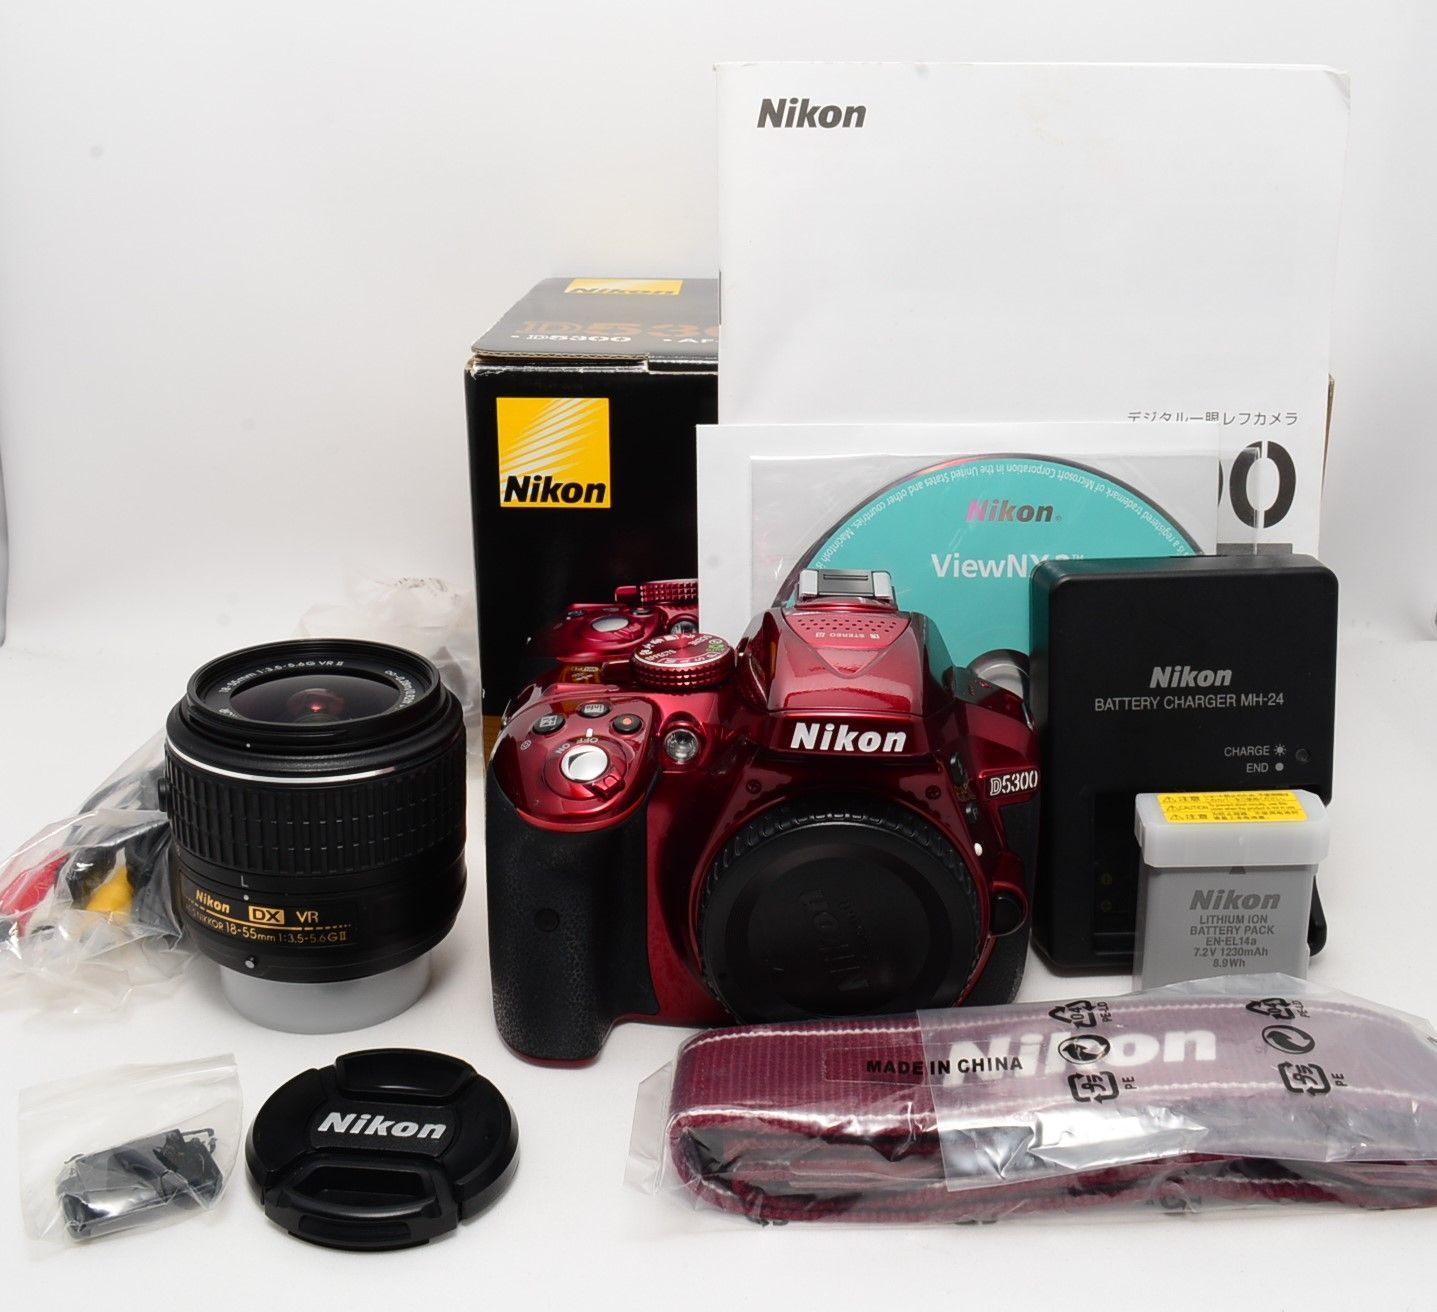 Nikon デジタル一眼レフカメラ D5300 18-55mm VR II レンズキット レッド 2400万画素 3.2型液晶 D5300LK18-55VR2RD  グッチーカメラ メルカリ